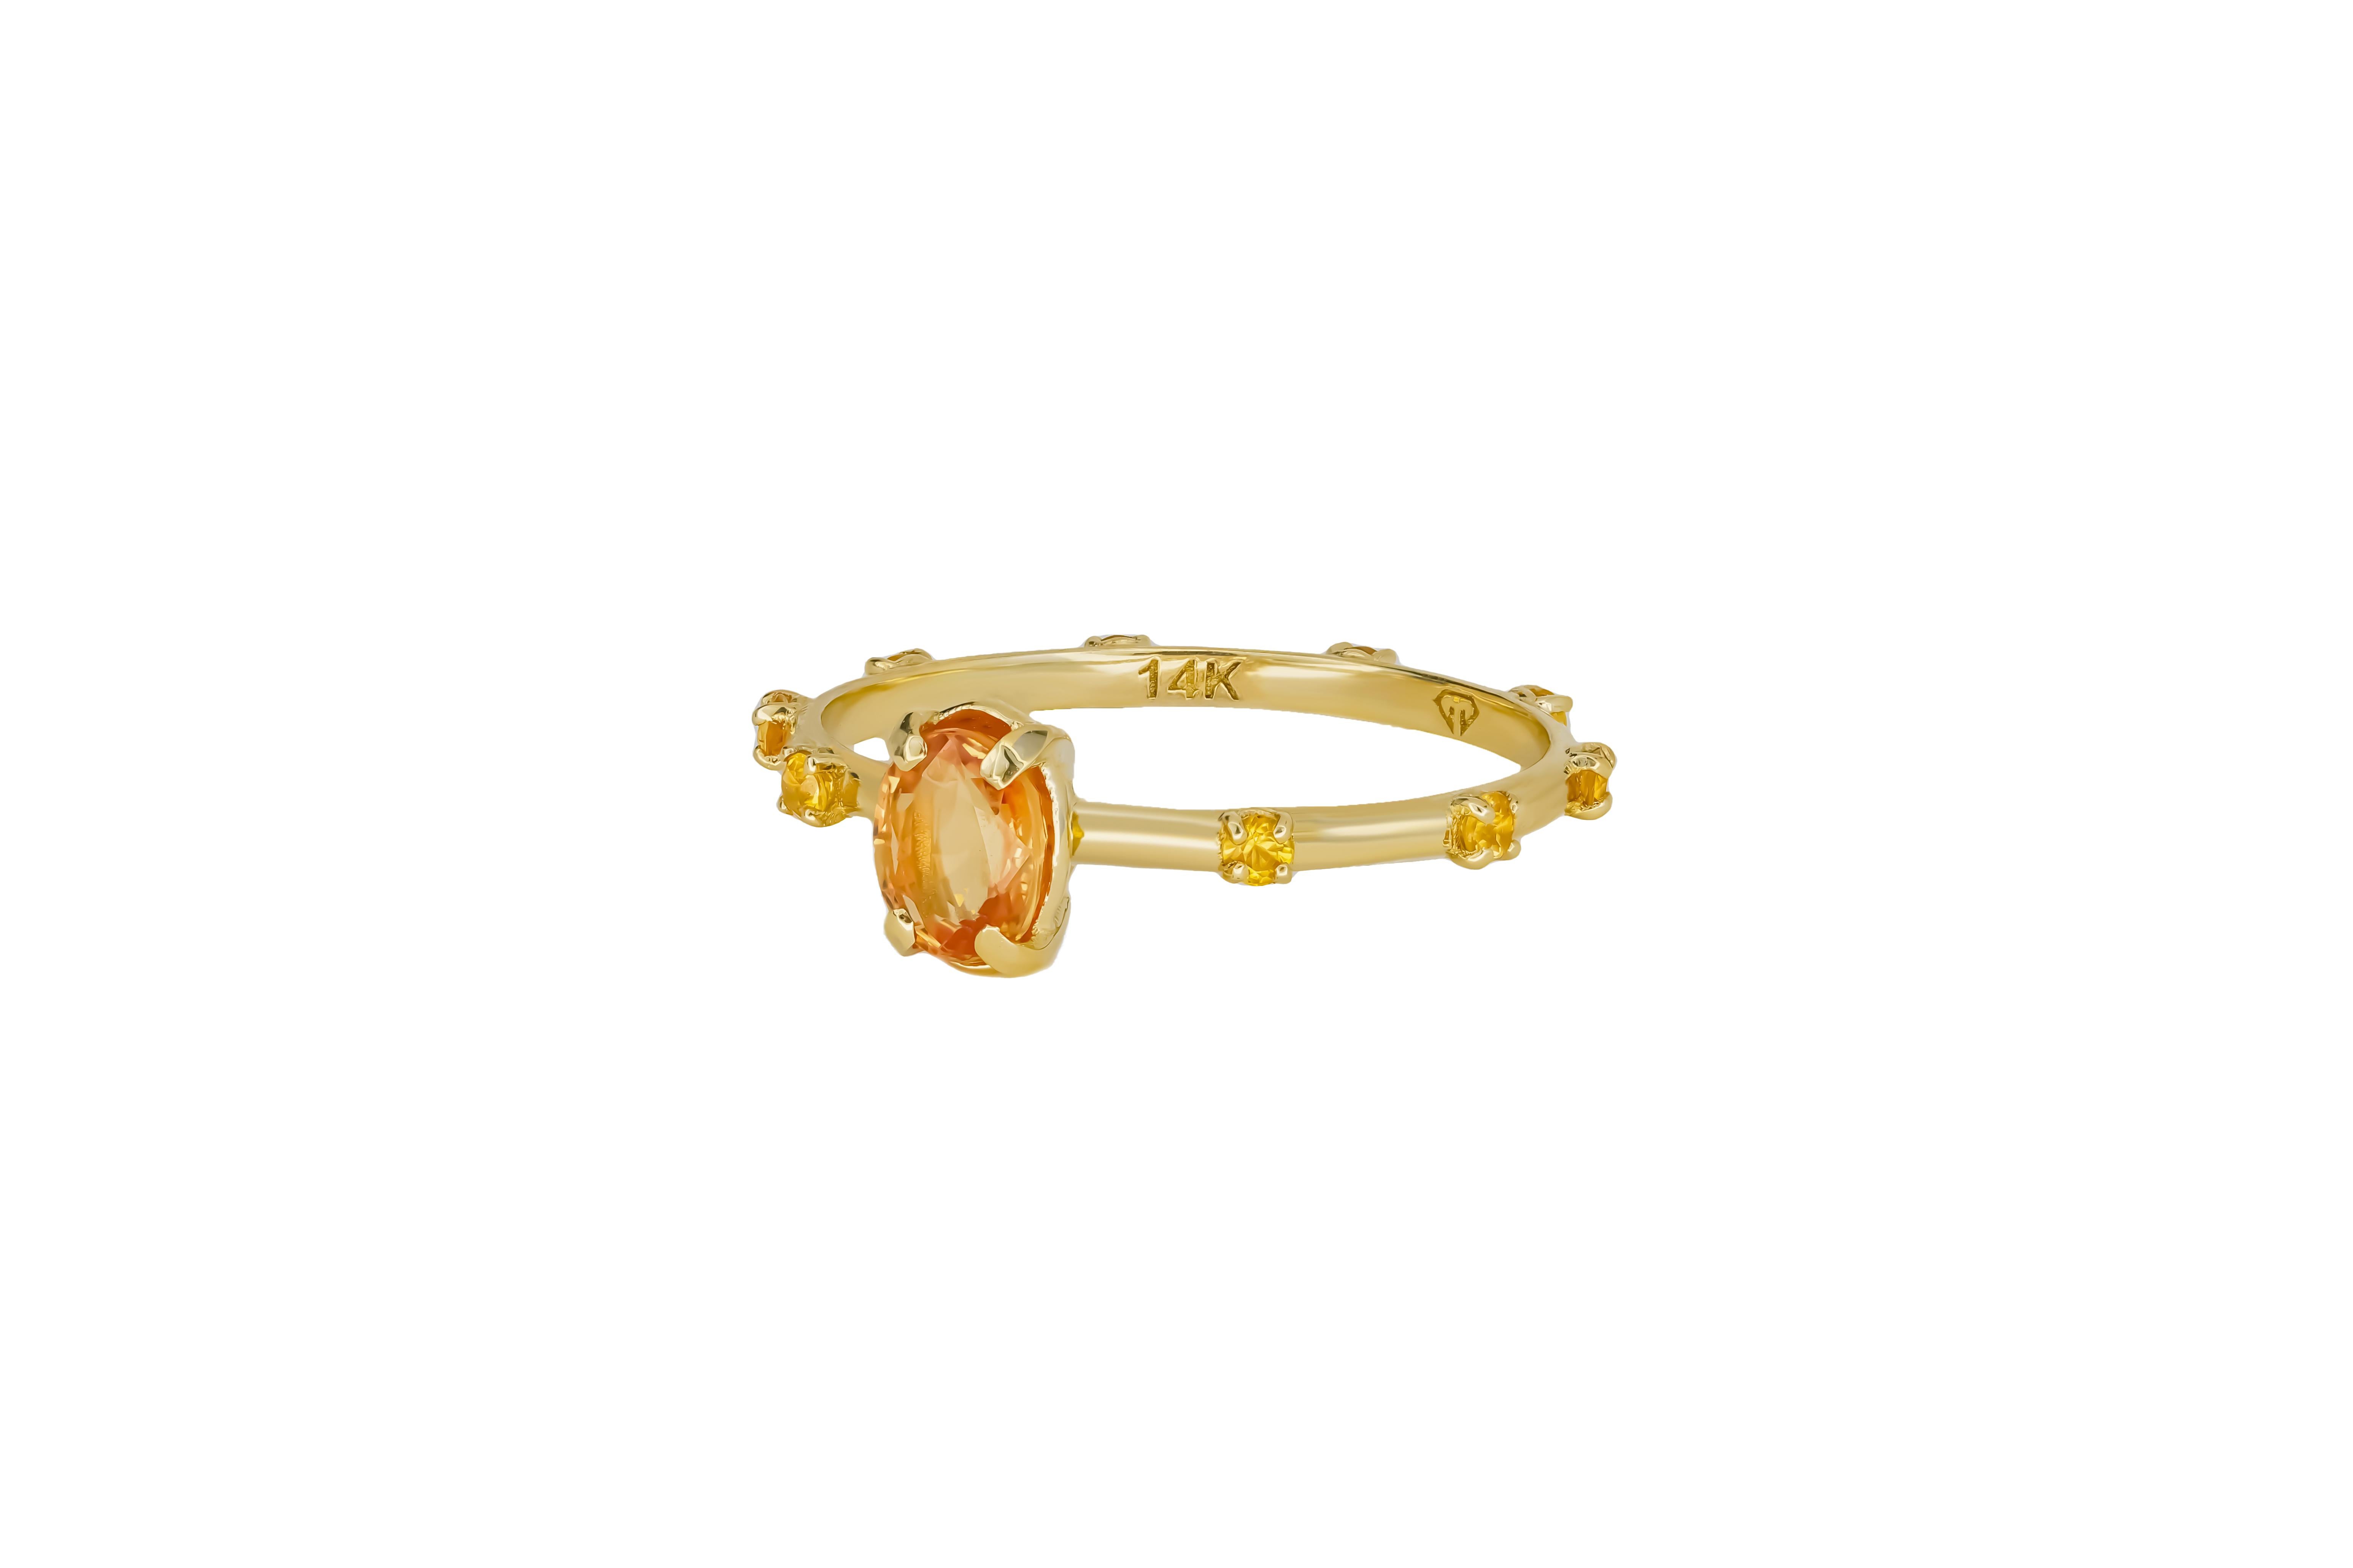 Oval Cut Peach gemstone 14k gold ring. For Sale